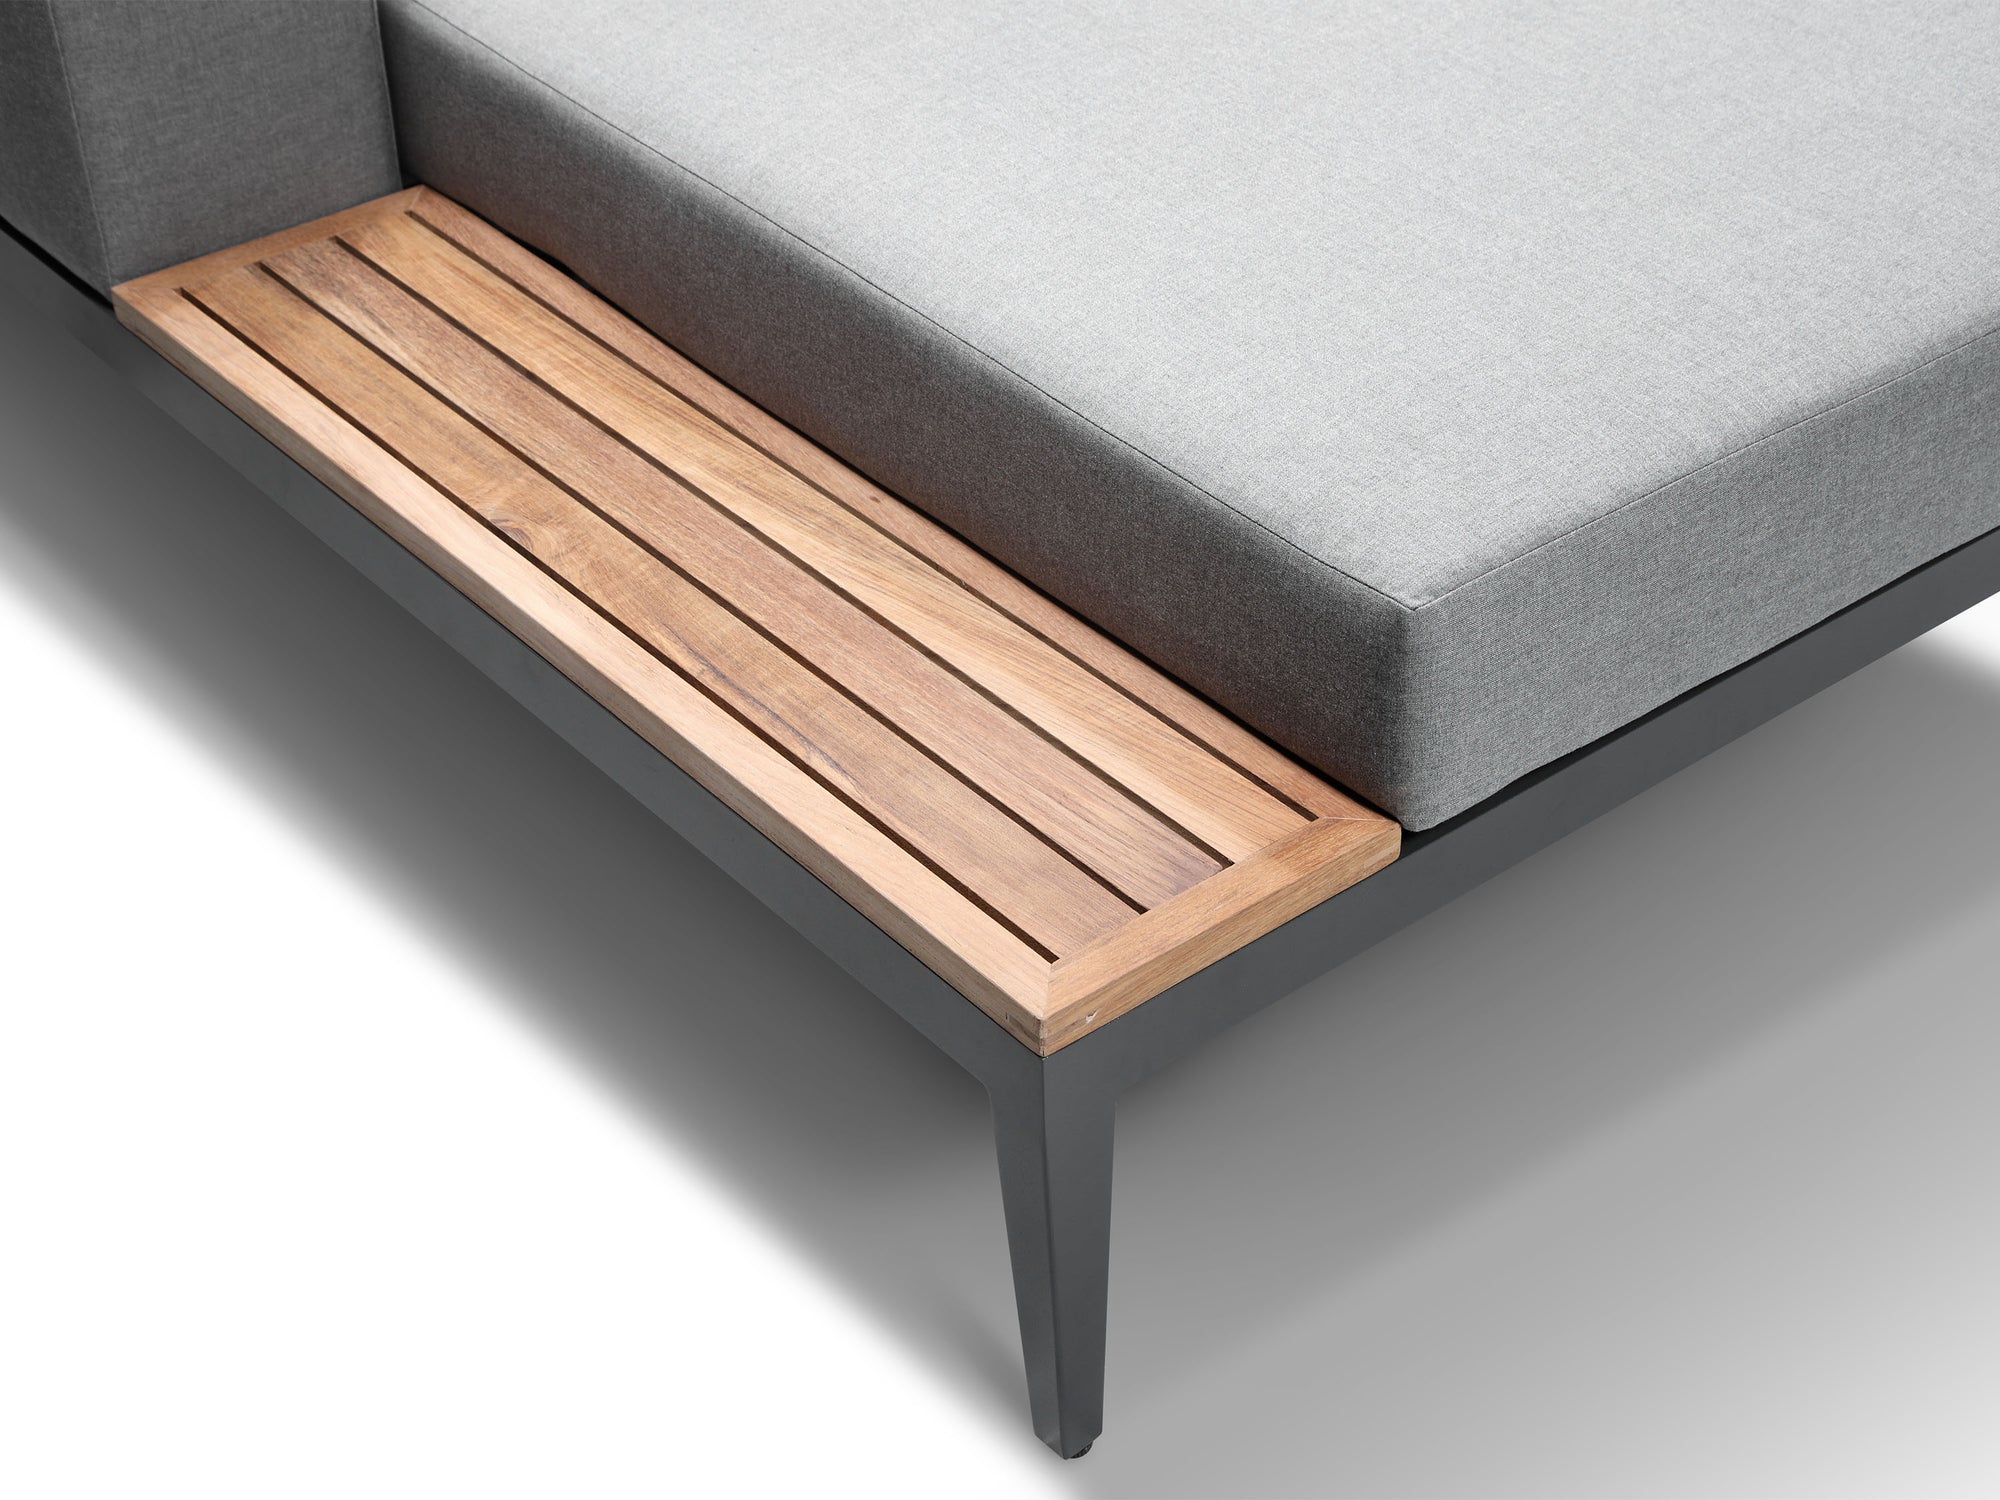 What Makes Teak Wood Furniture Special?